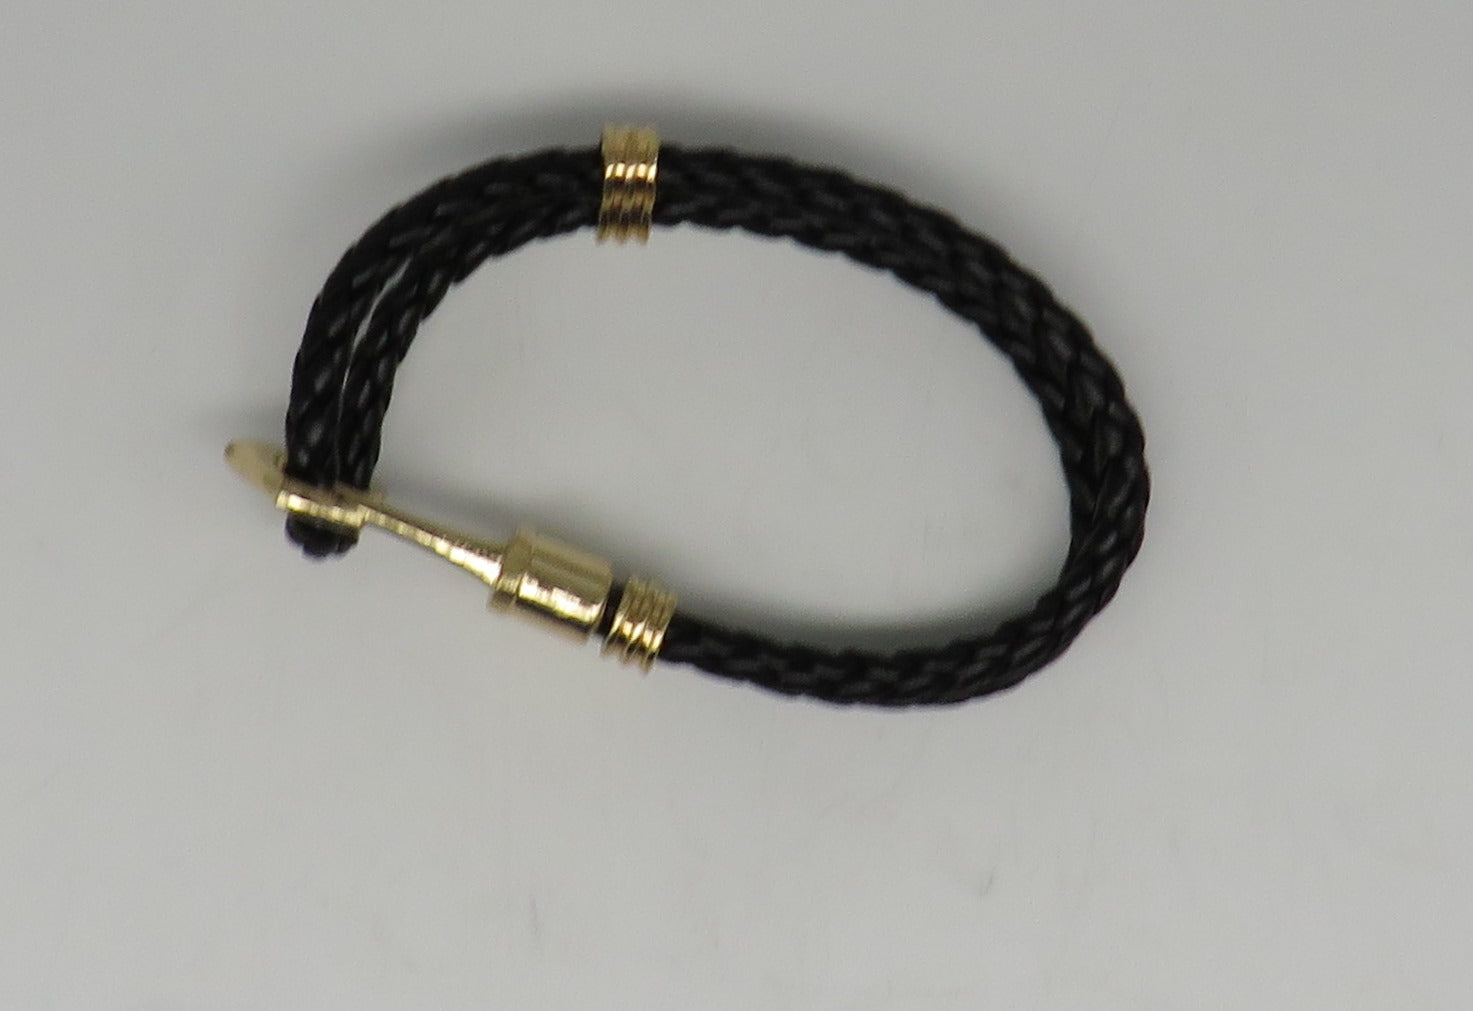 Unisex Leather Handmade Braided Cuff Anchor Bangle Bracelet Wristband Black-Gold